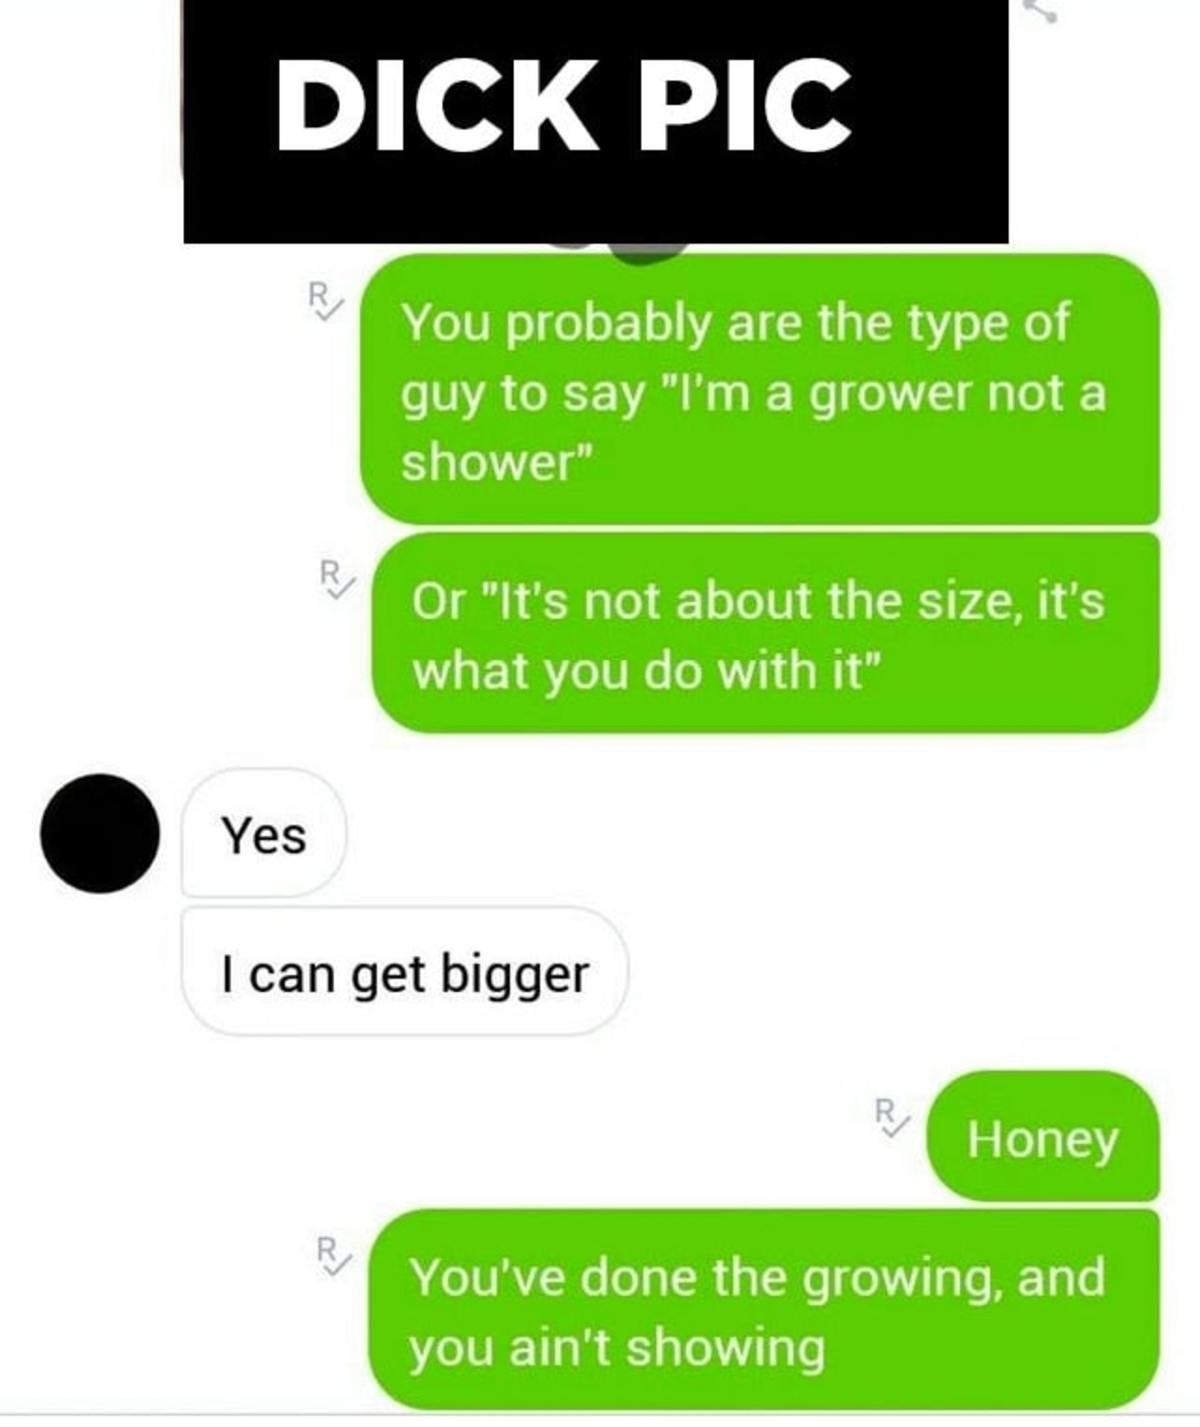 Sharing dick pic